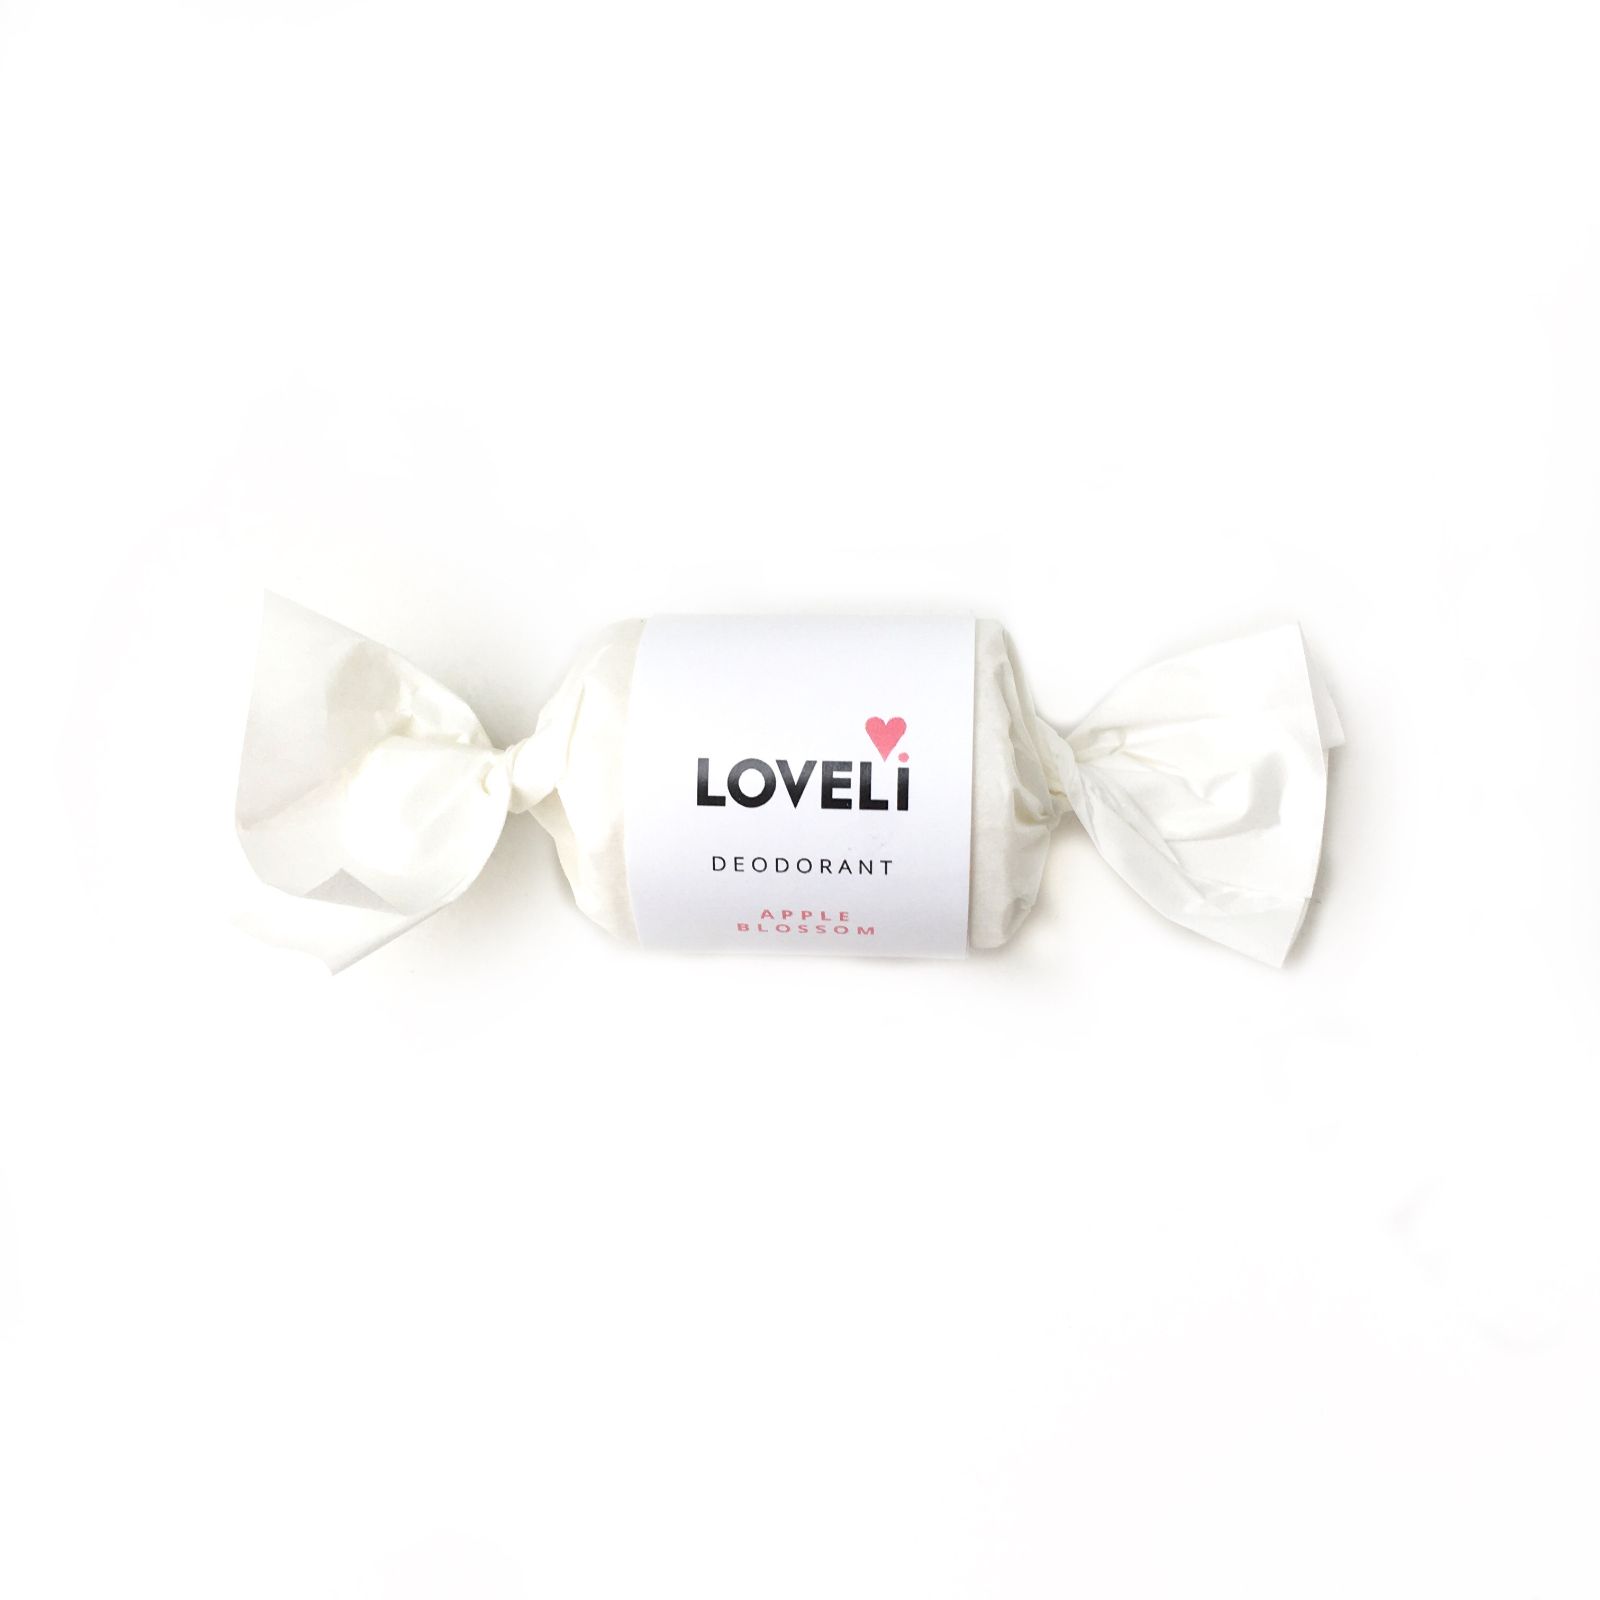 Loveli Deodorant 30ml refill